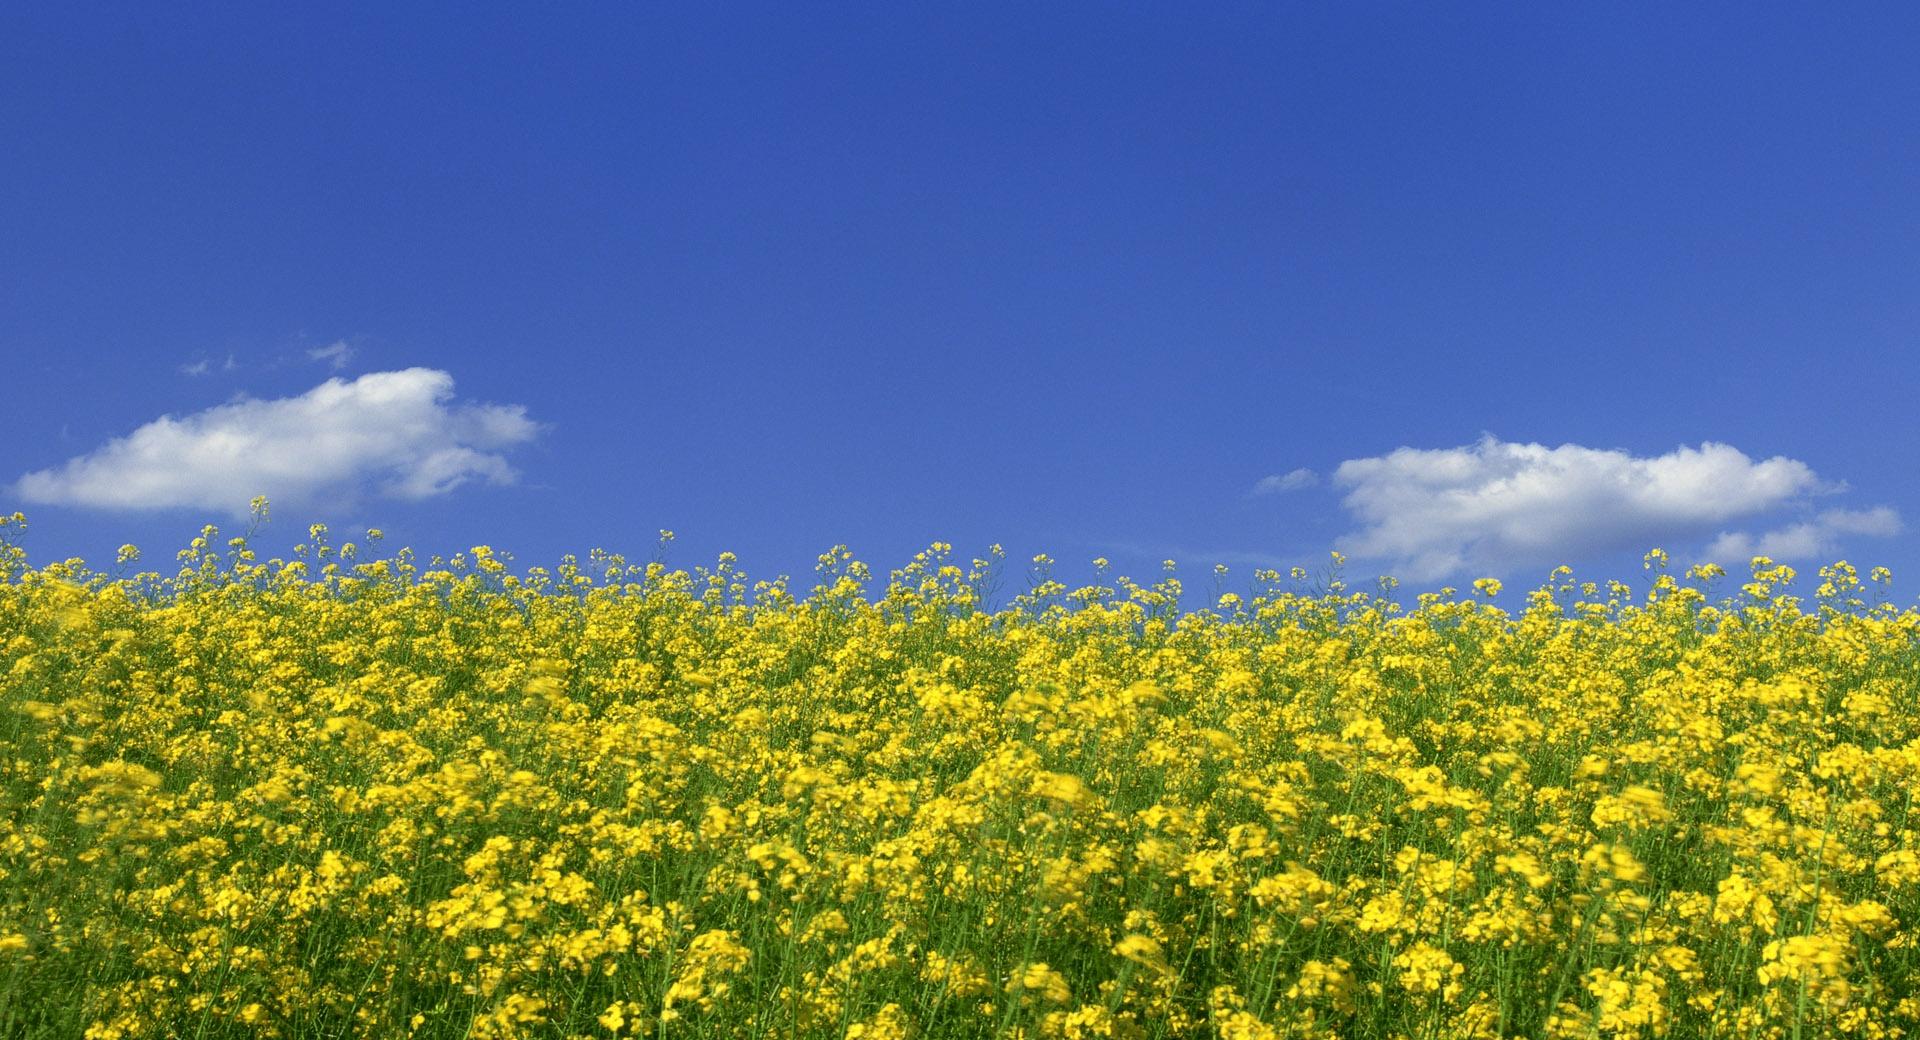 Mustard Flower Field 1 at 1024 x 1024 iPad size wallpapers HD quality